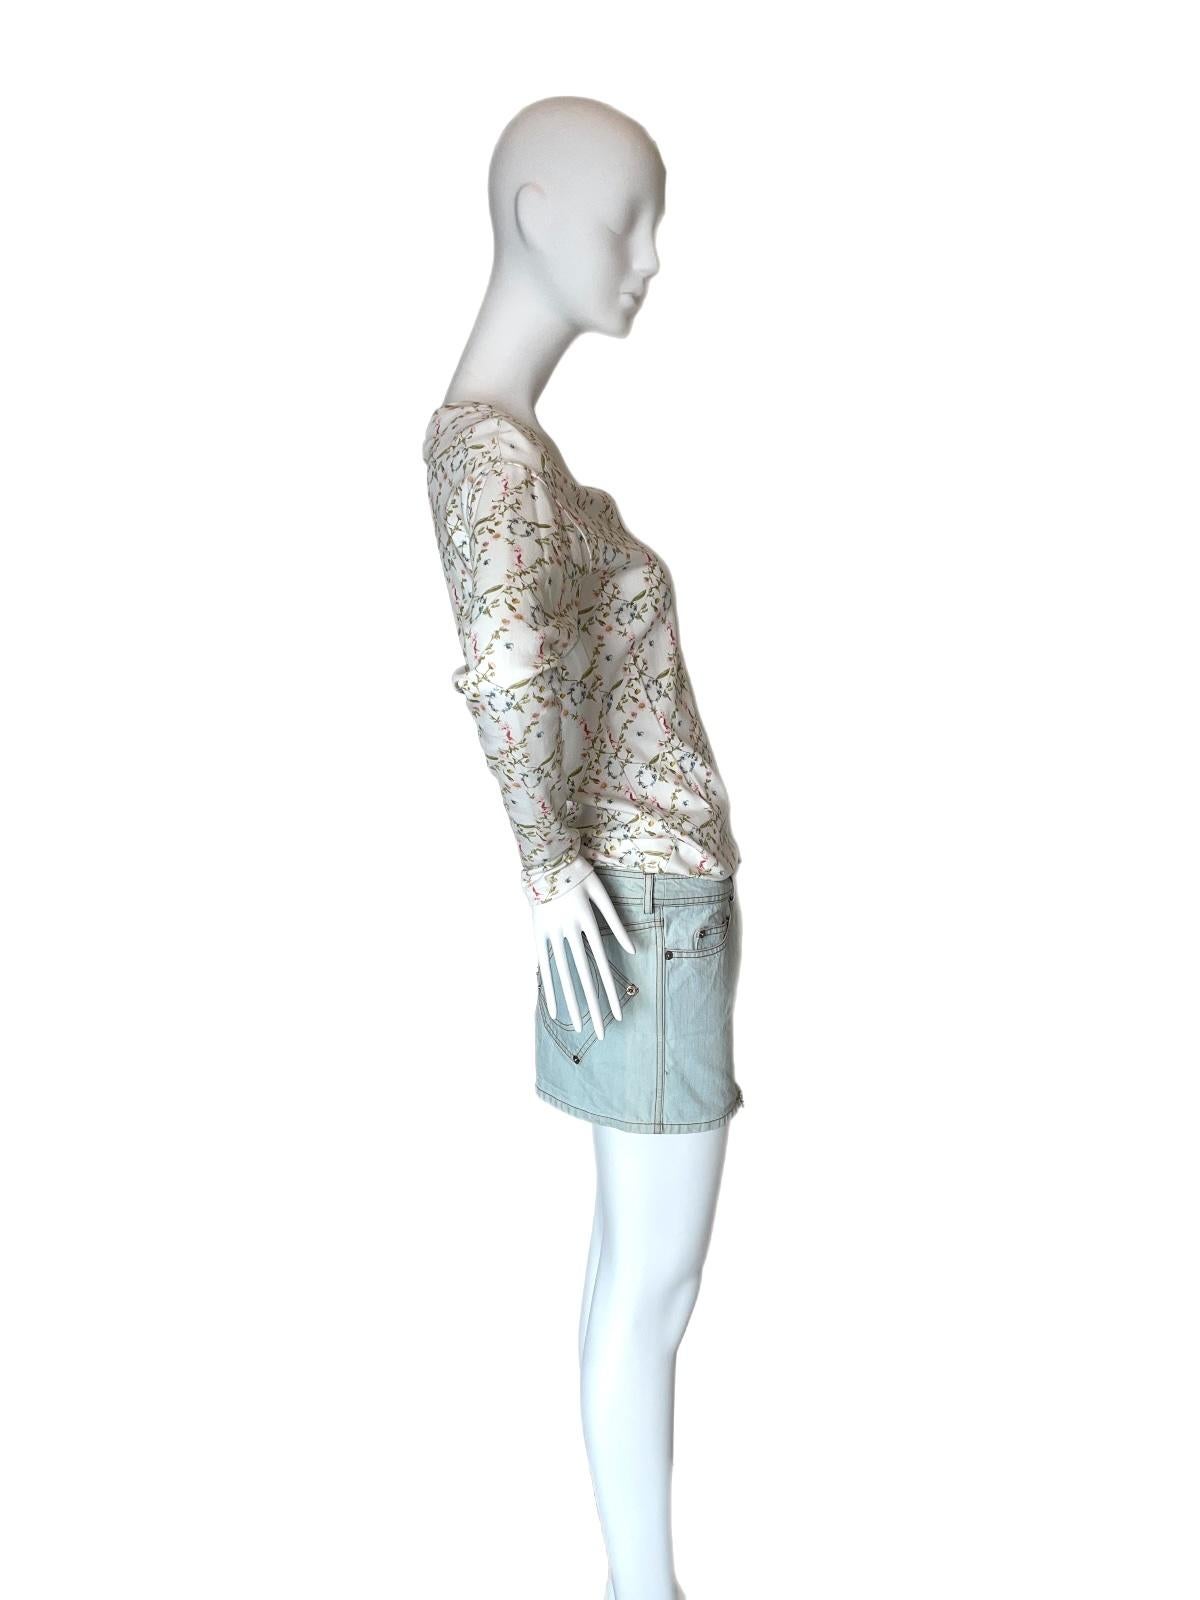 DIOR by JOHN GALLIANO 2005 runway vintage mini dress For Sale 5